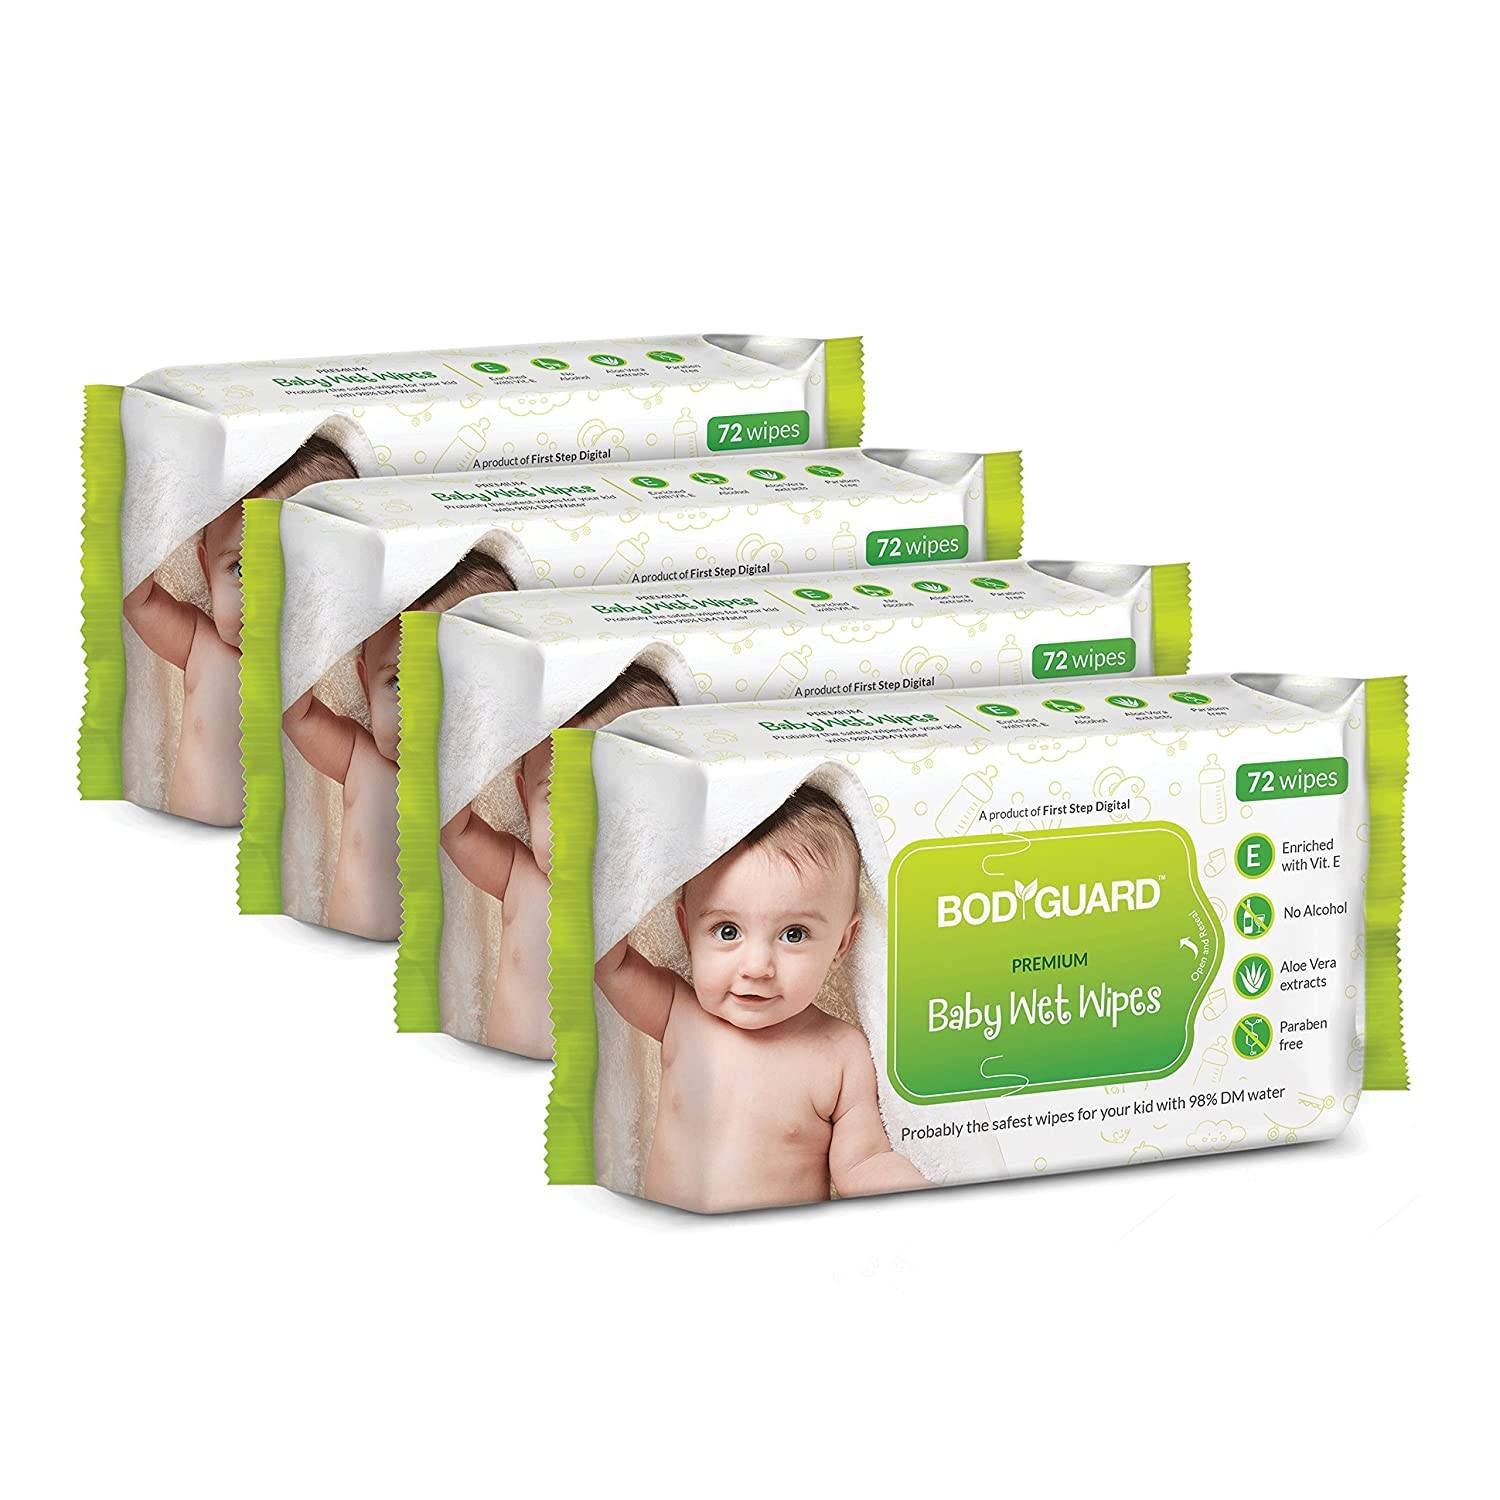 BodyGuard Premium Paraben Free Baby Wet Wipes (Pack of 4)